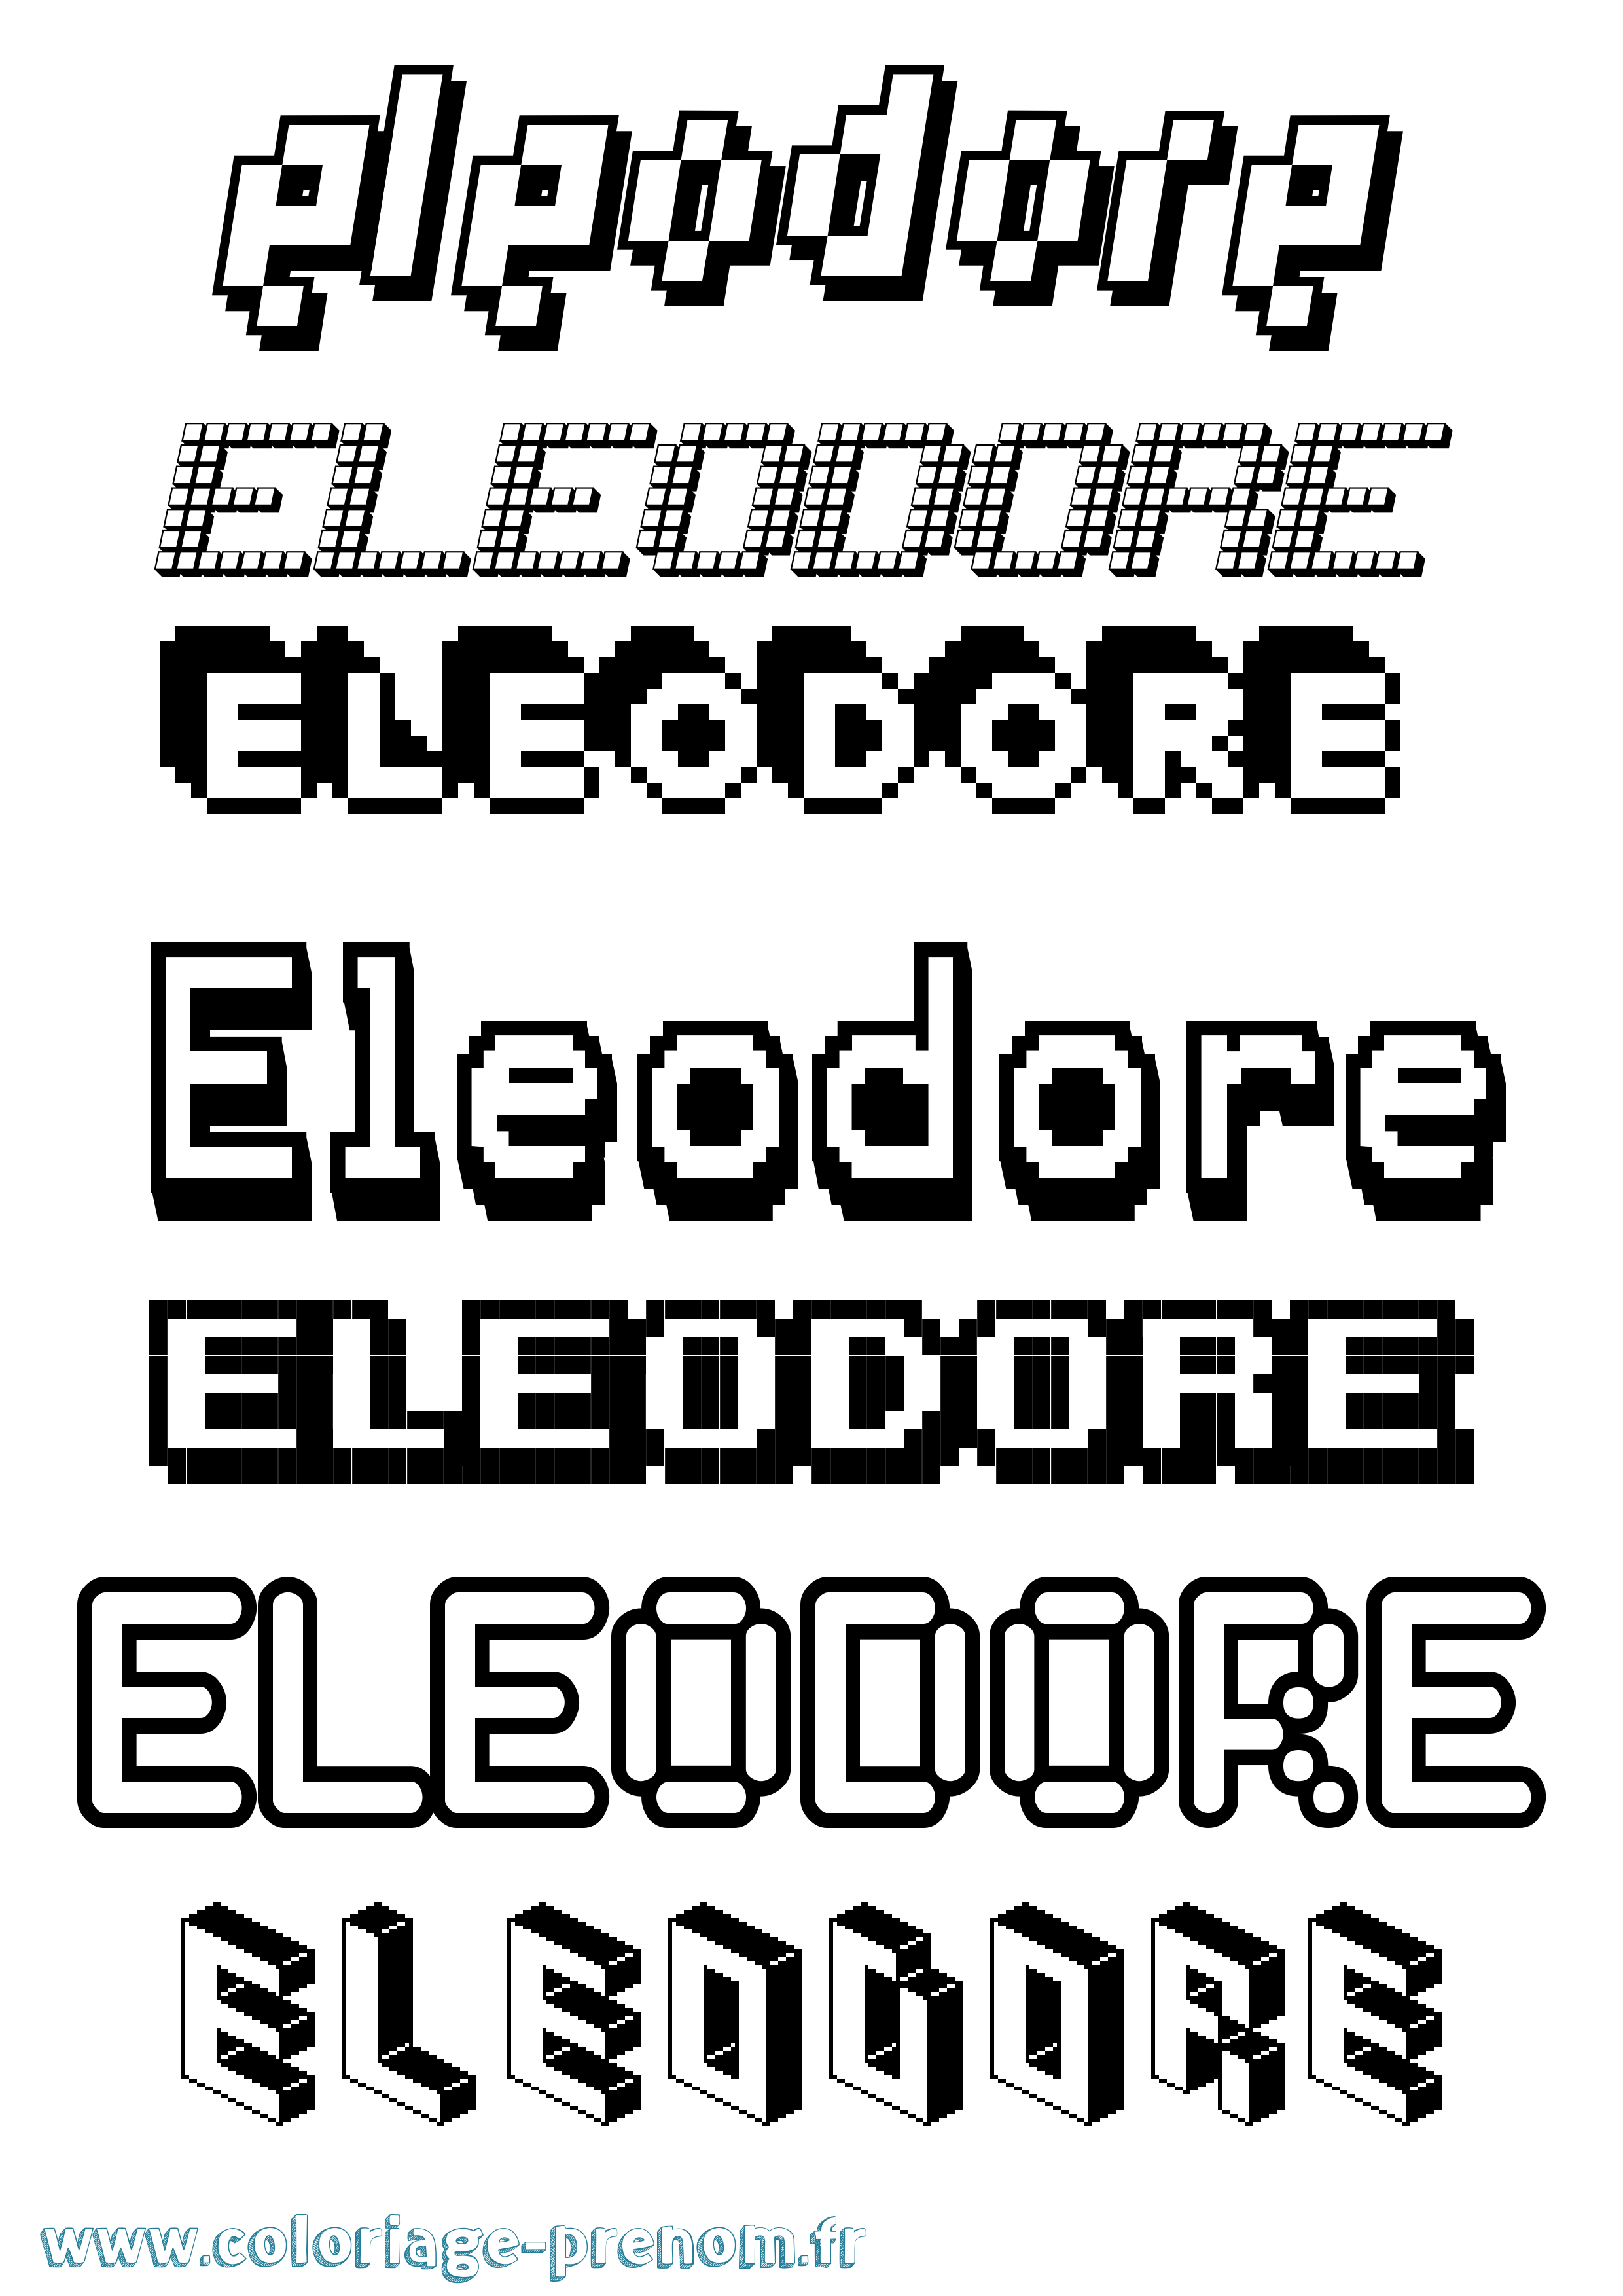 Coloriage prénom Eleodore Pixel